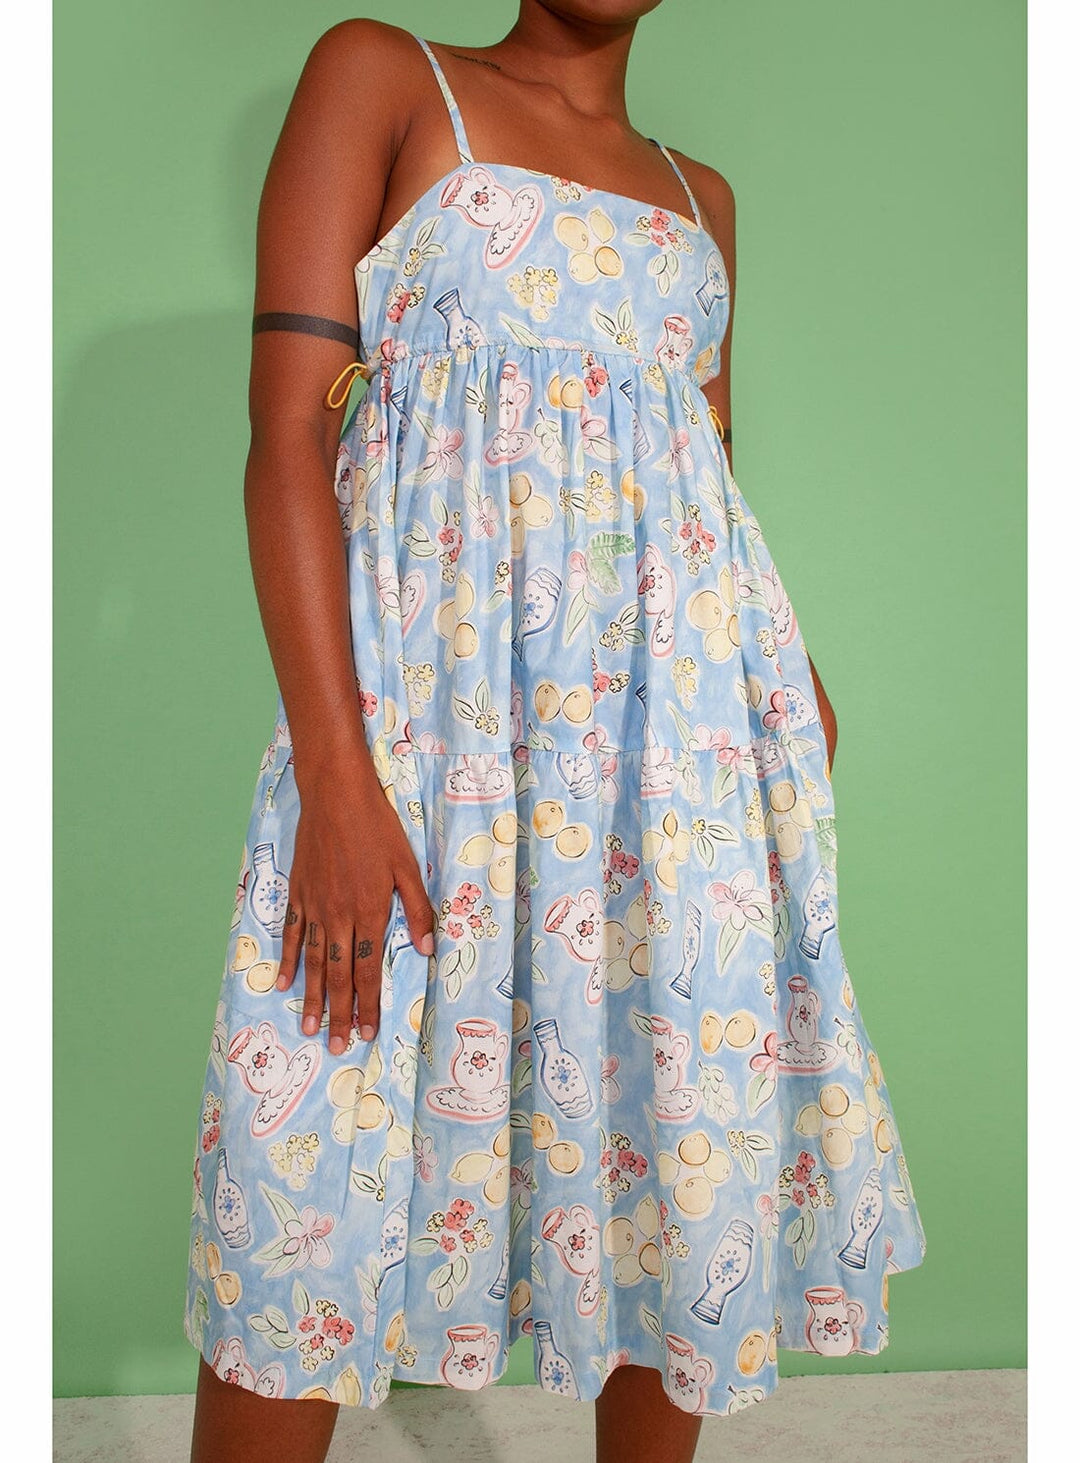 Dawson Dress in Still Life Print Dresses YBDFinds 